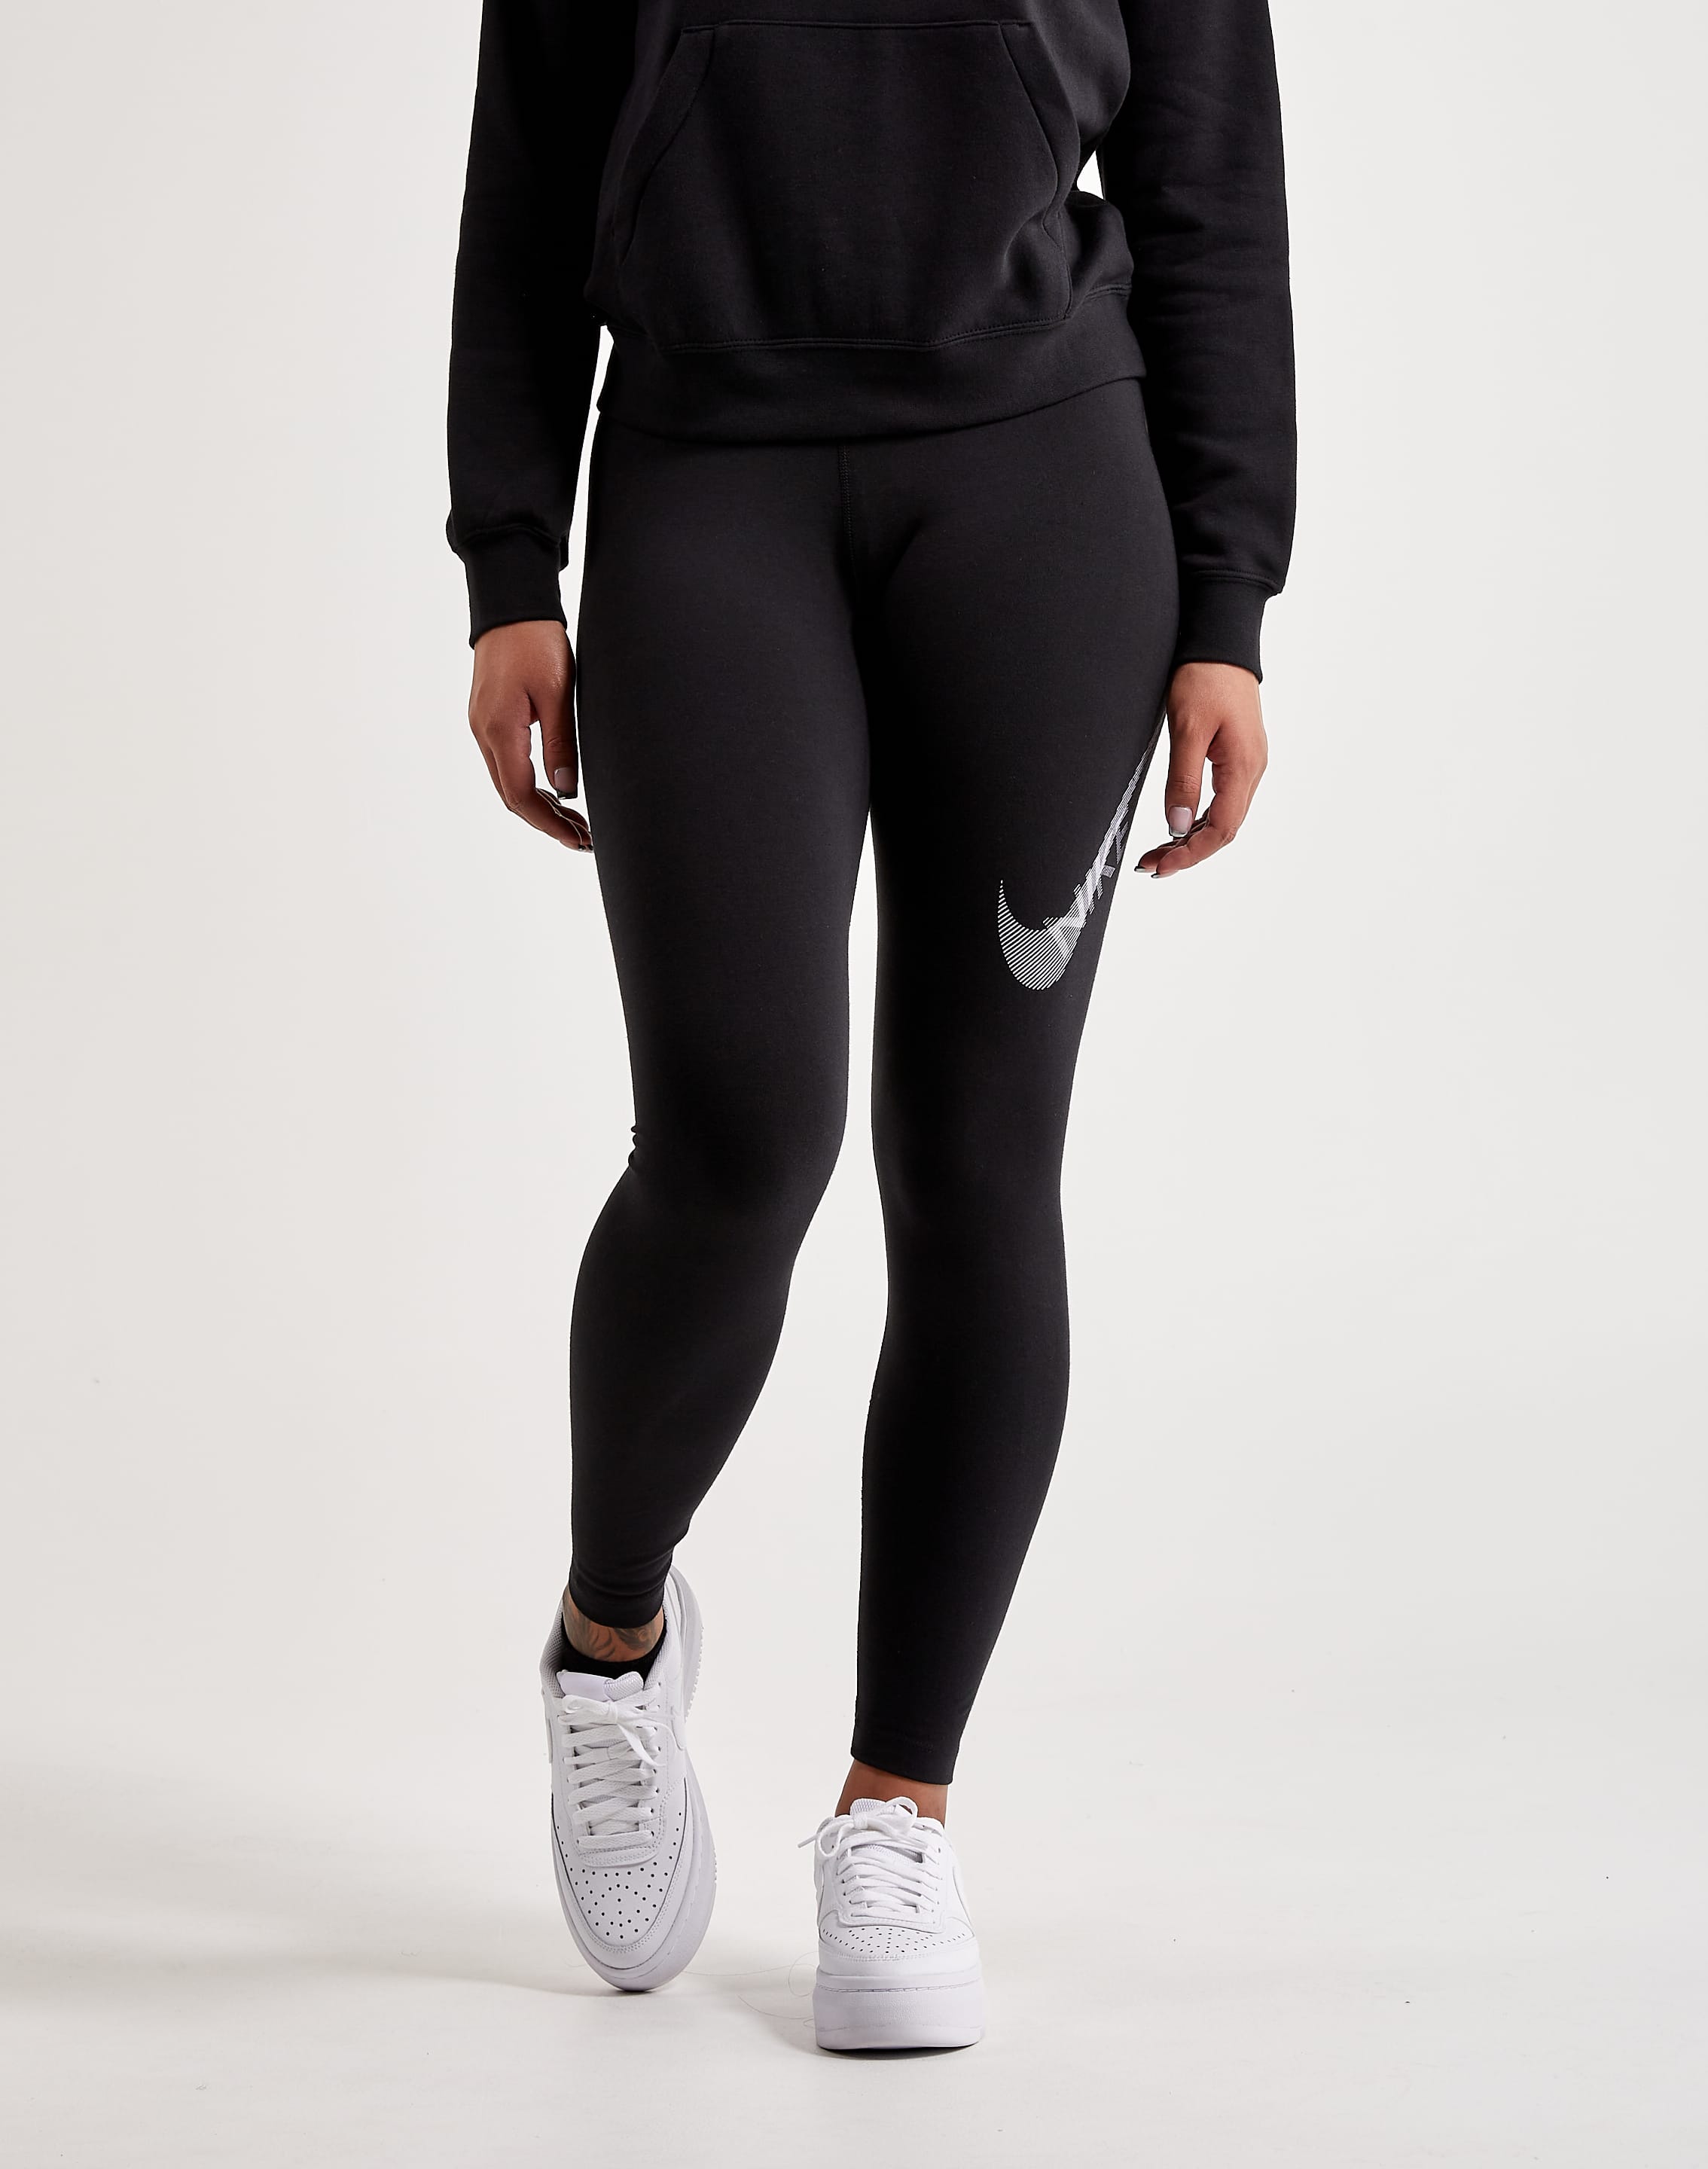 Buy Nike Womens Club Legging Large Swoosh Black/White 815997-010 Size Large  at